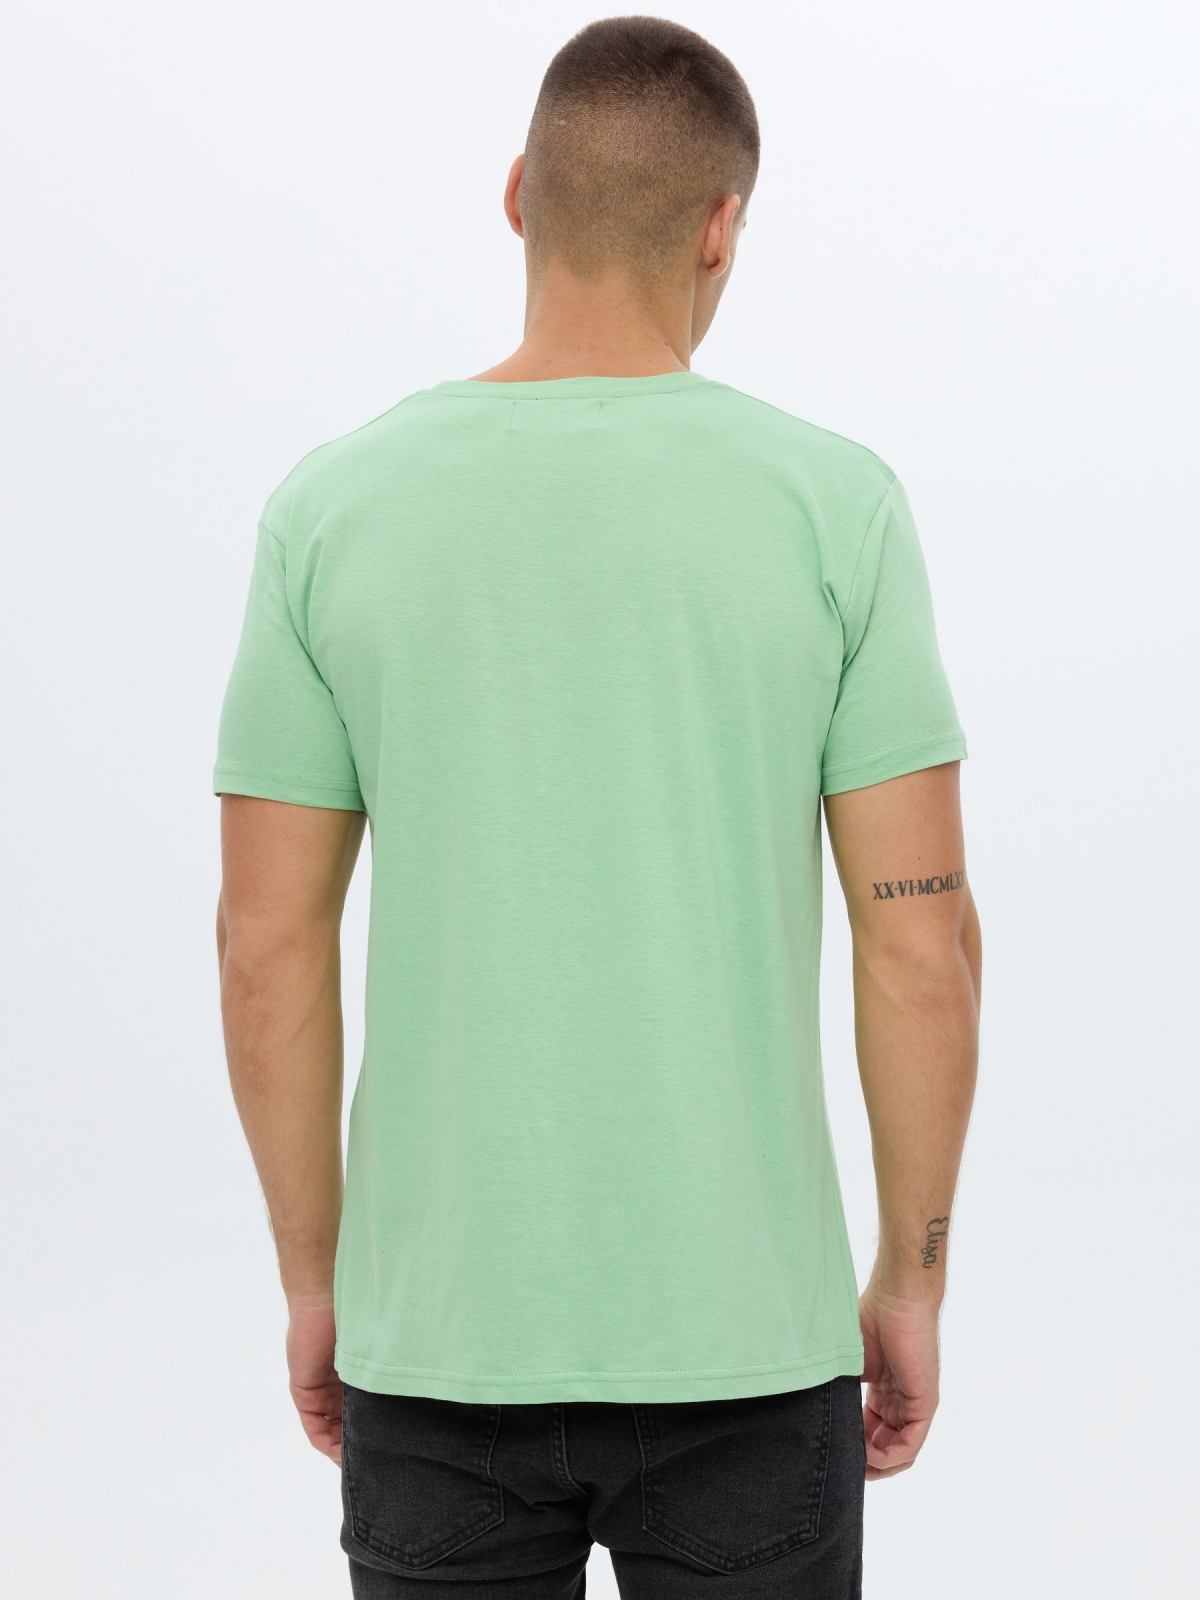 Camiseta estampado INSIDE verde claro vista media trasera